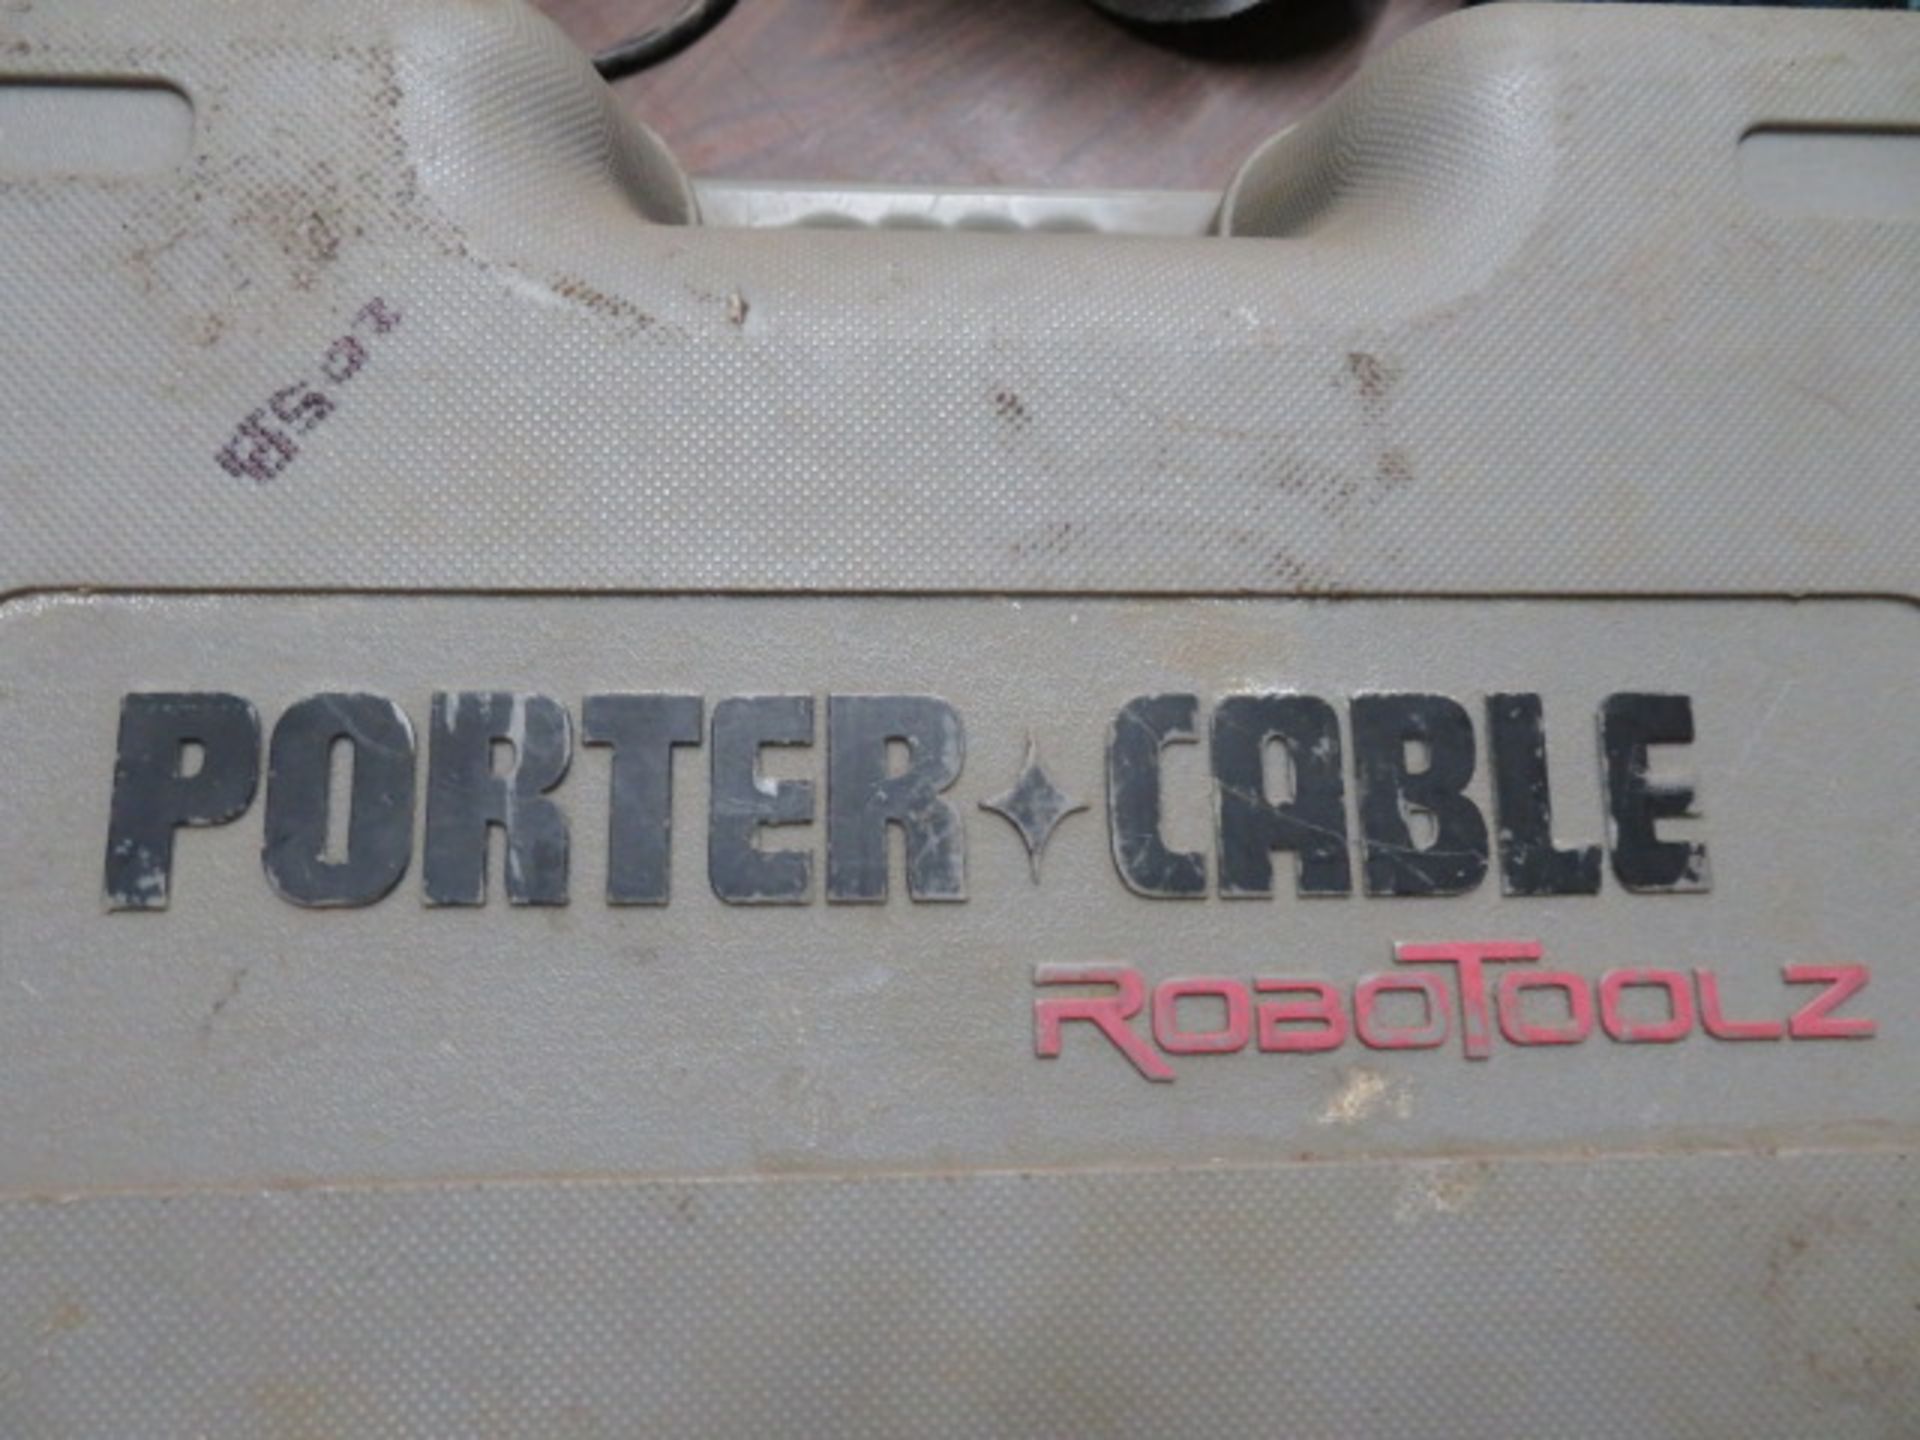 LASER LEVEL, PORTER-CABLE ROBOTOOLZ - Image 3 of 3